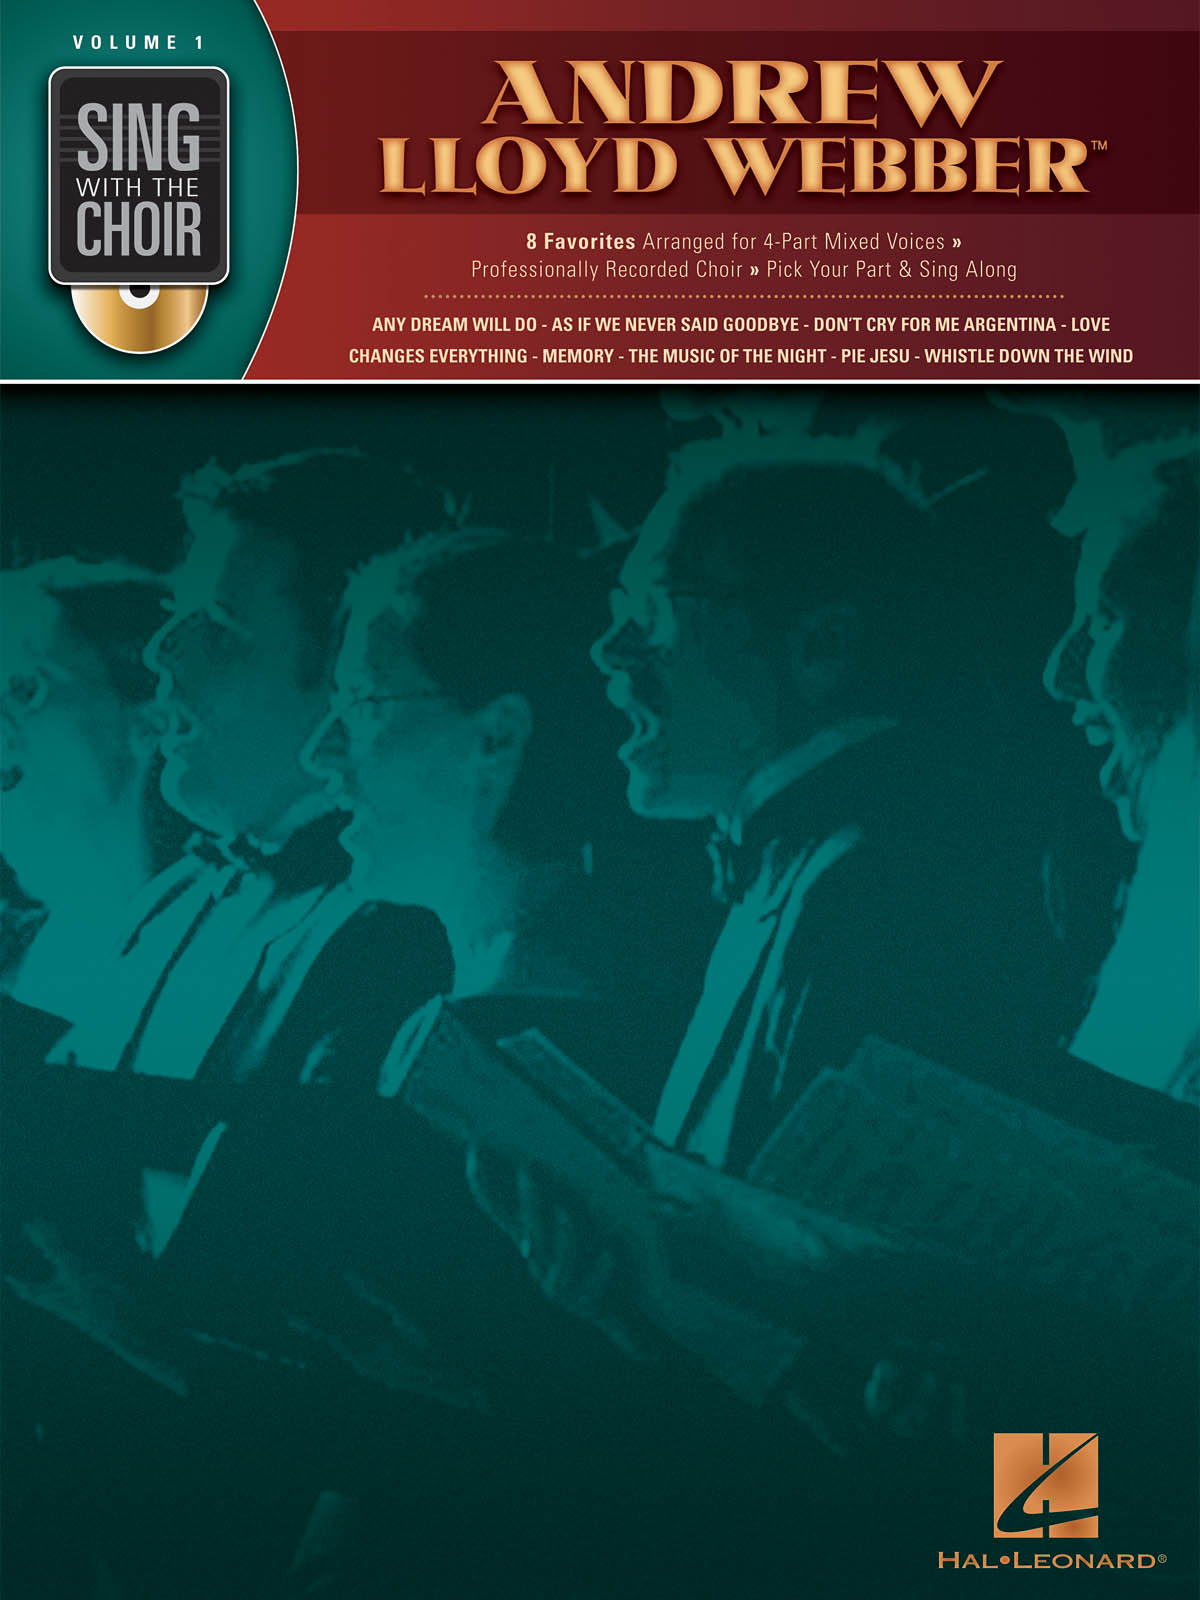 Andrew Lloyd Webber - Sing with the Choir Volume 1